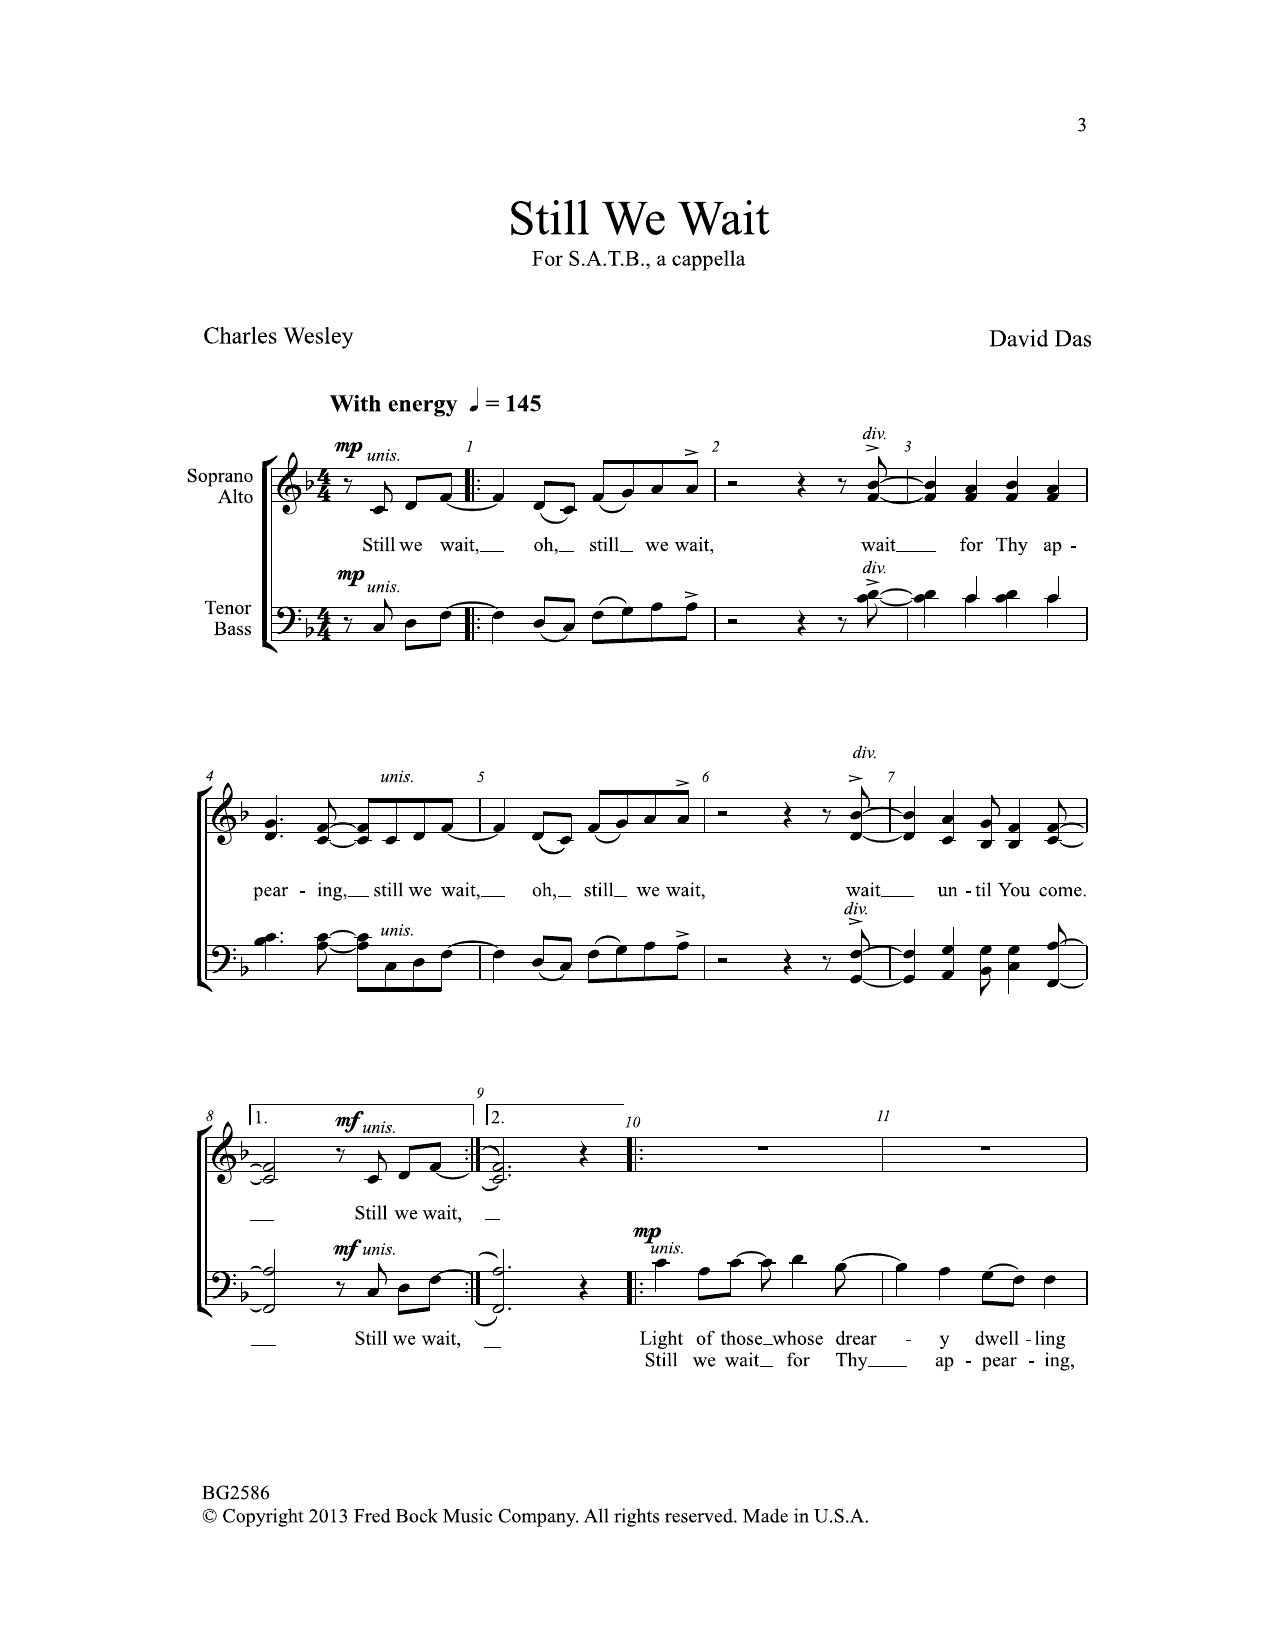 David Das Still We Wait Sheet Music Notes & Chords for SATB Choir - Download or Print PDF